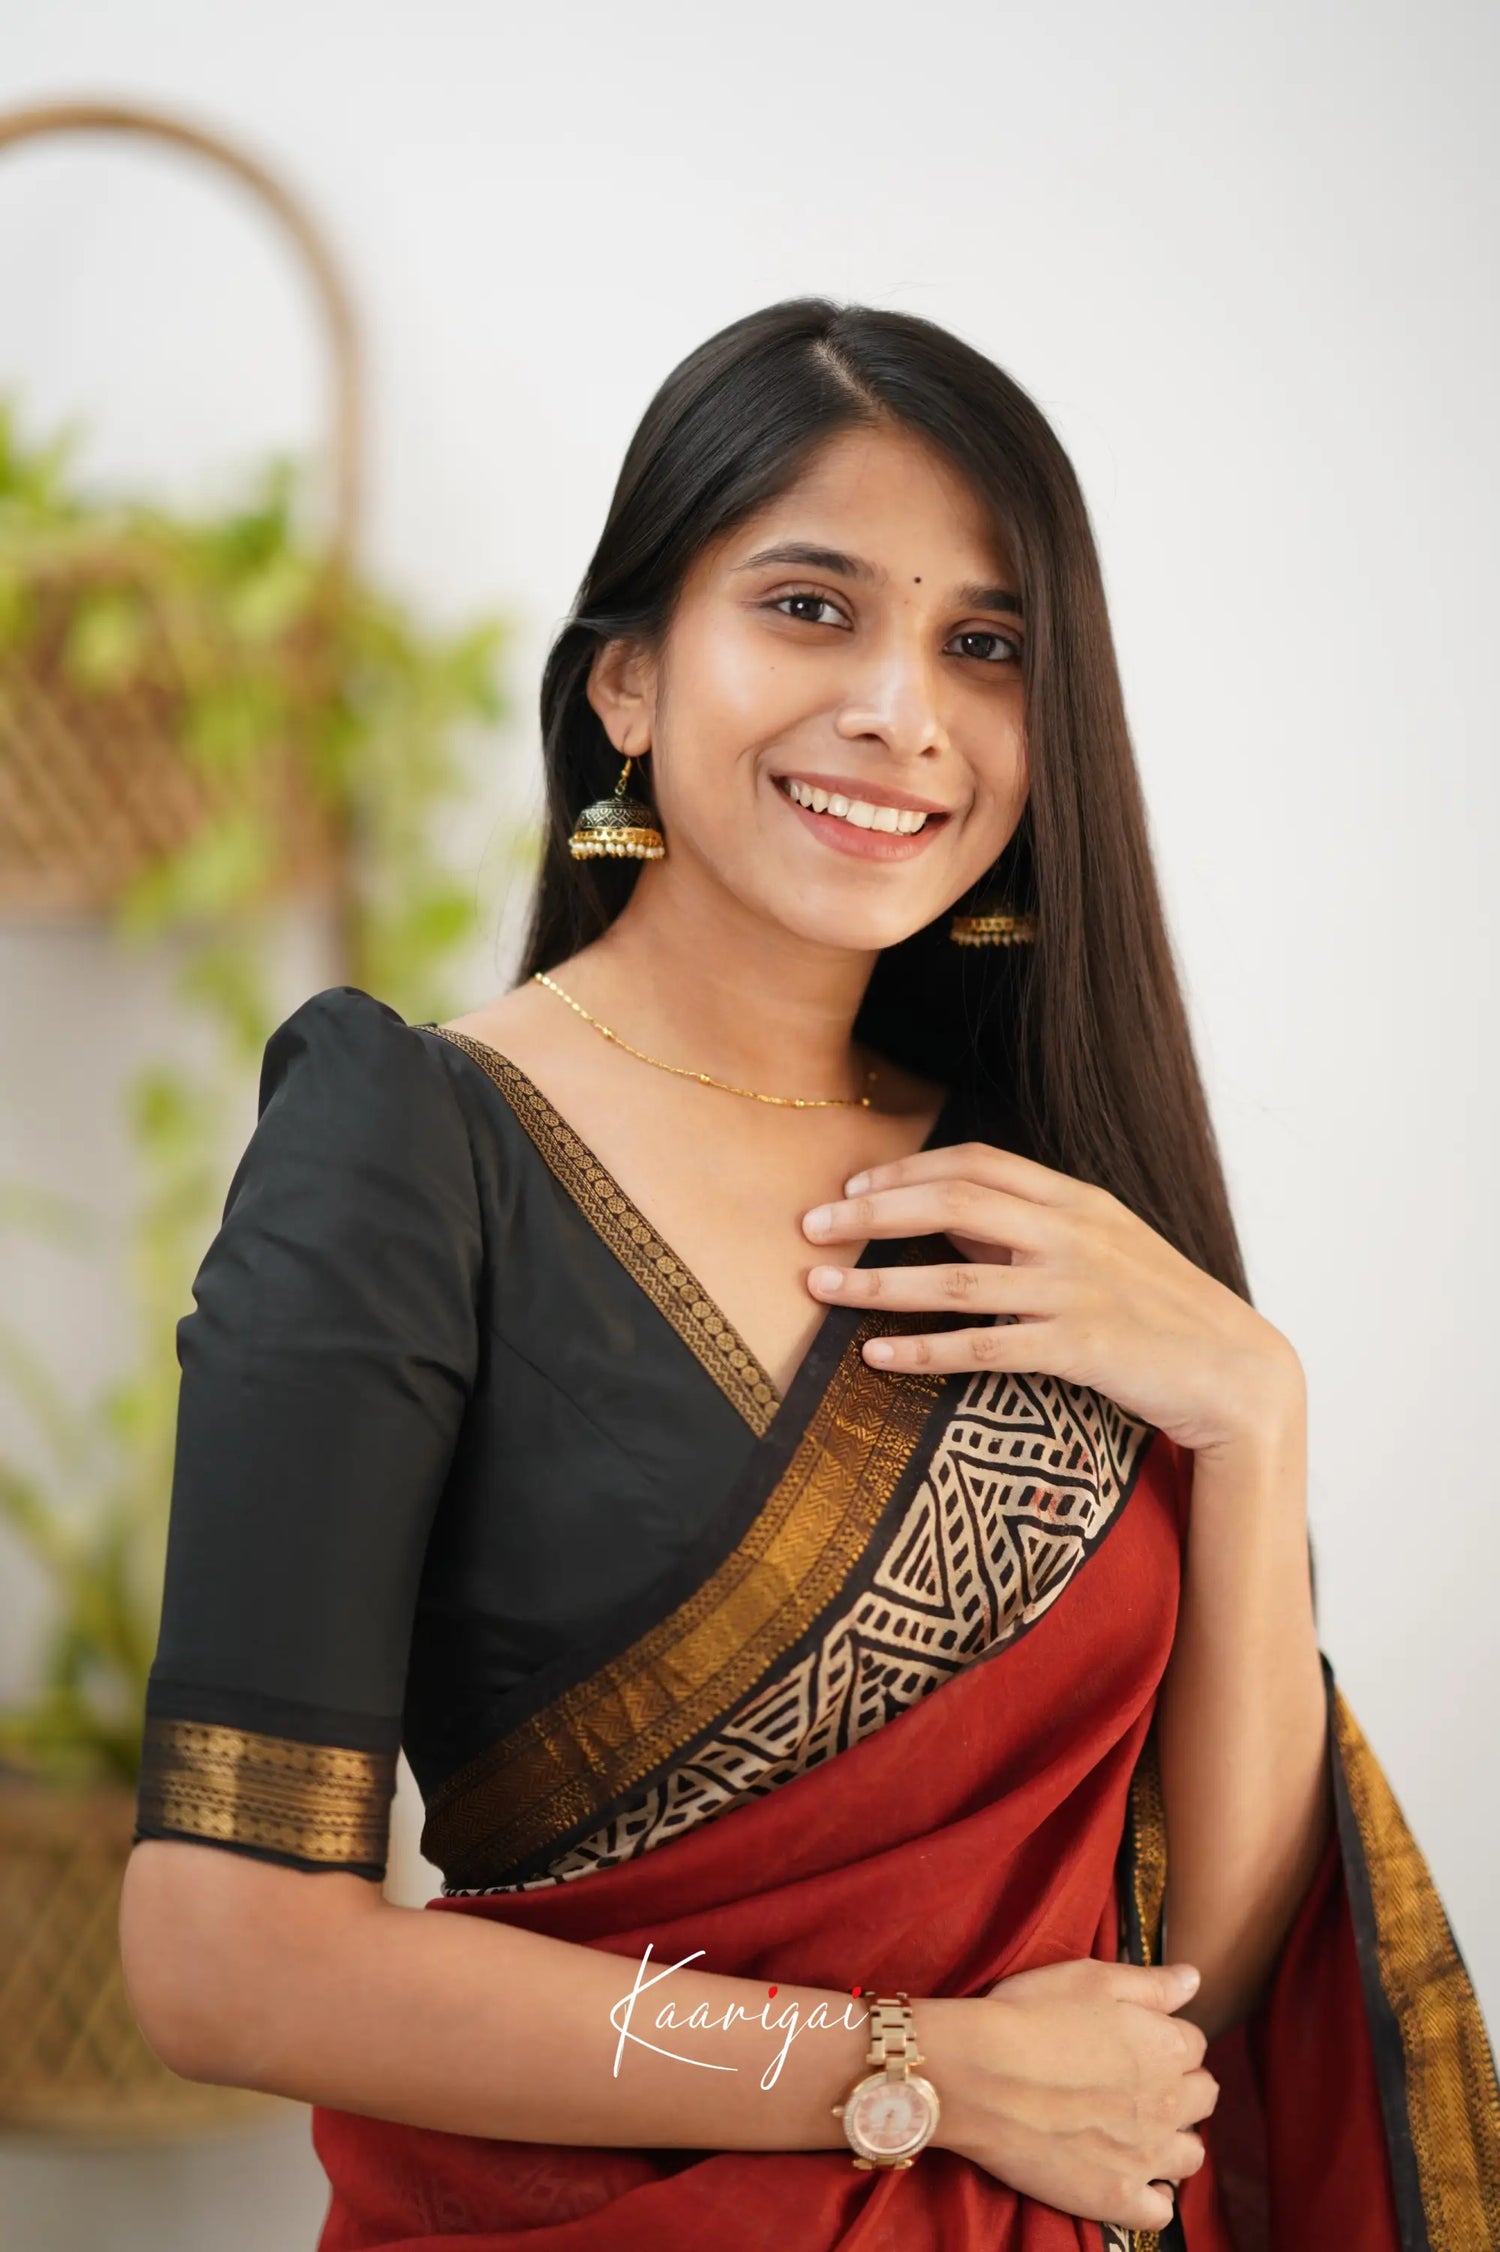 Mayuri Maheswari Silk Cotton Saree - Red Sarees